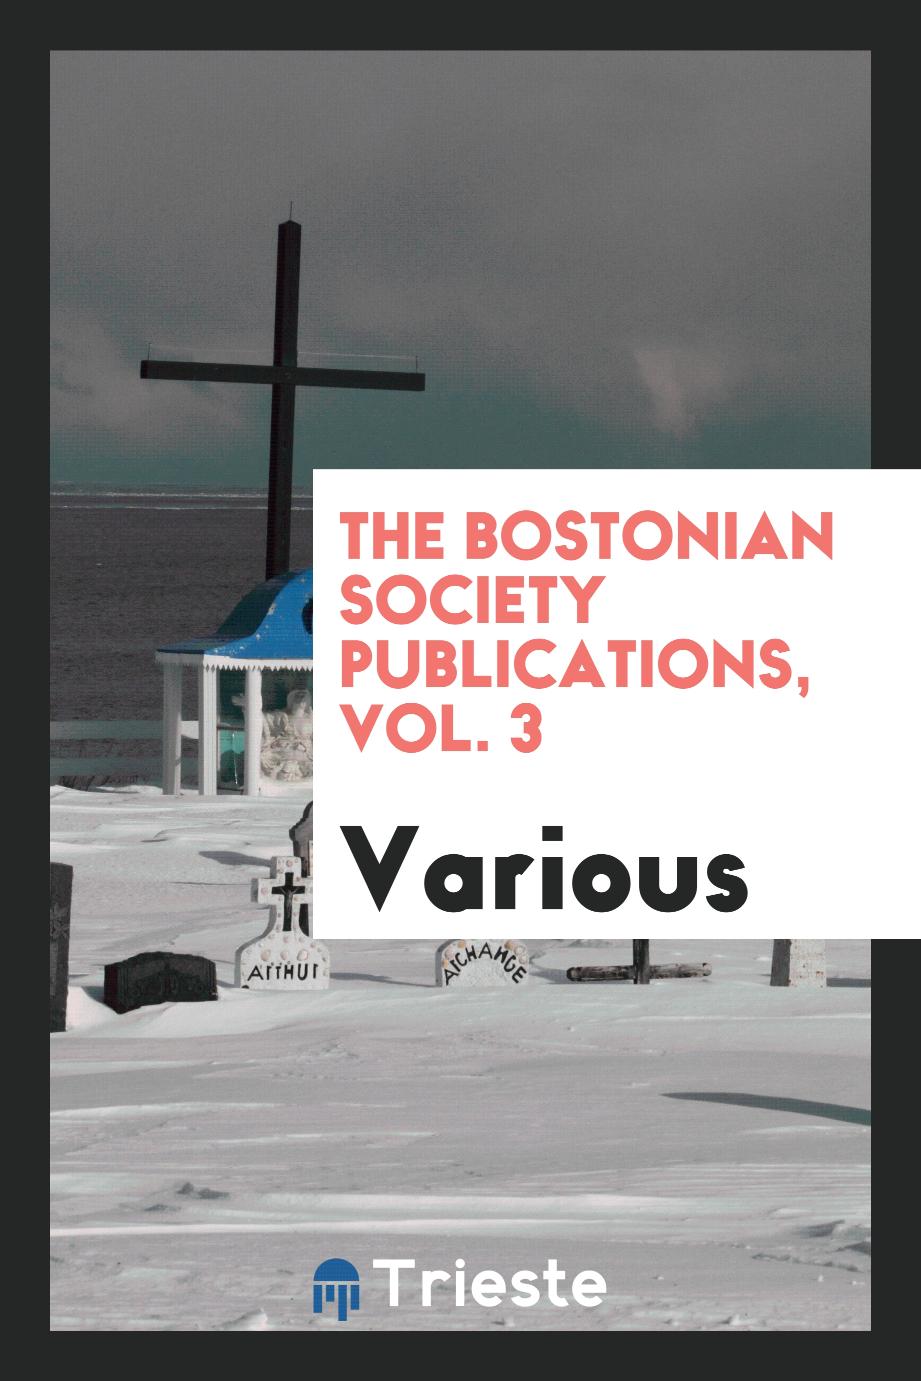 The Bostonian Society Publications, Vol. 3